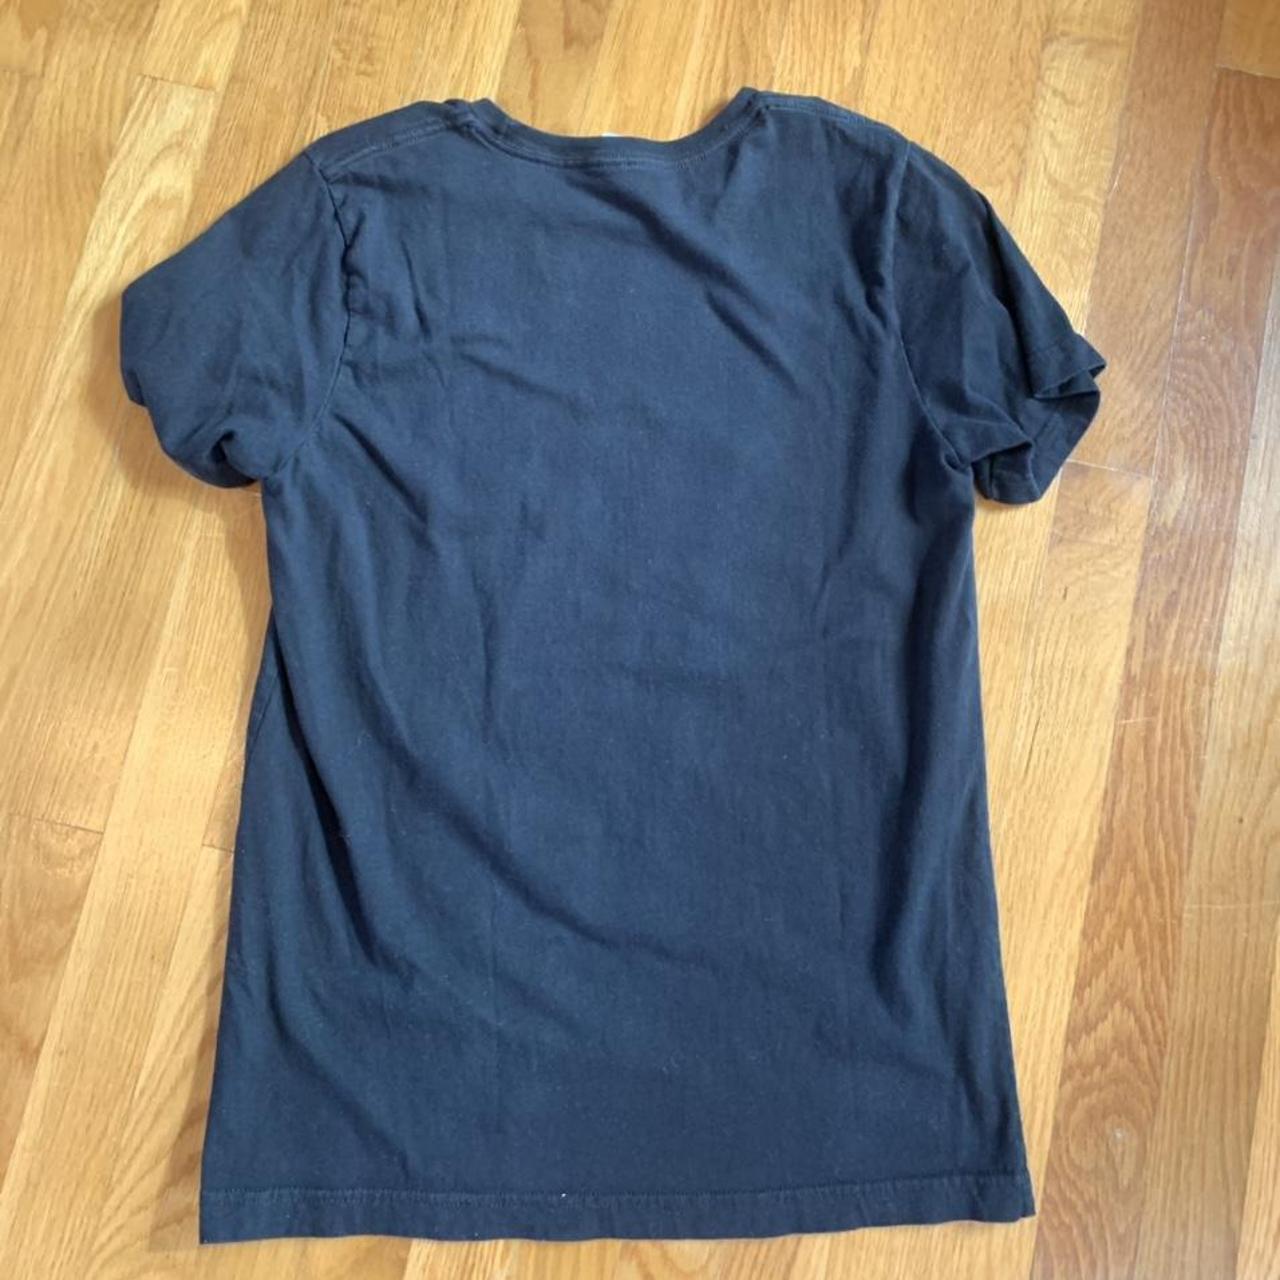 Product Image 3 - Hot mulligan shirt. Women’s medium


Tags: